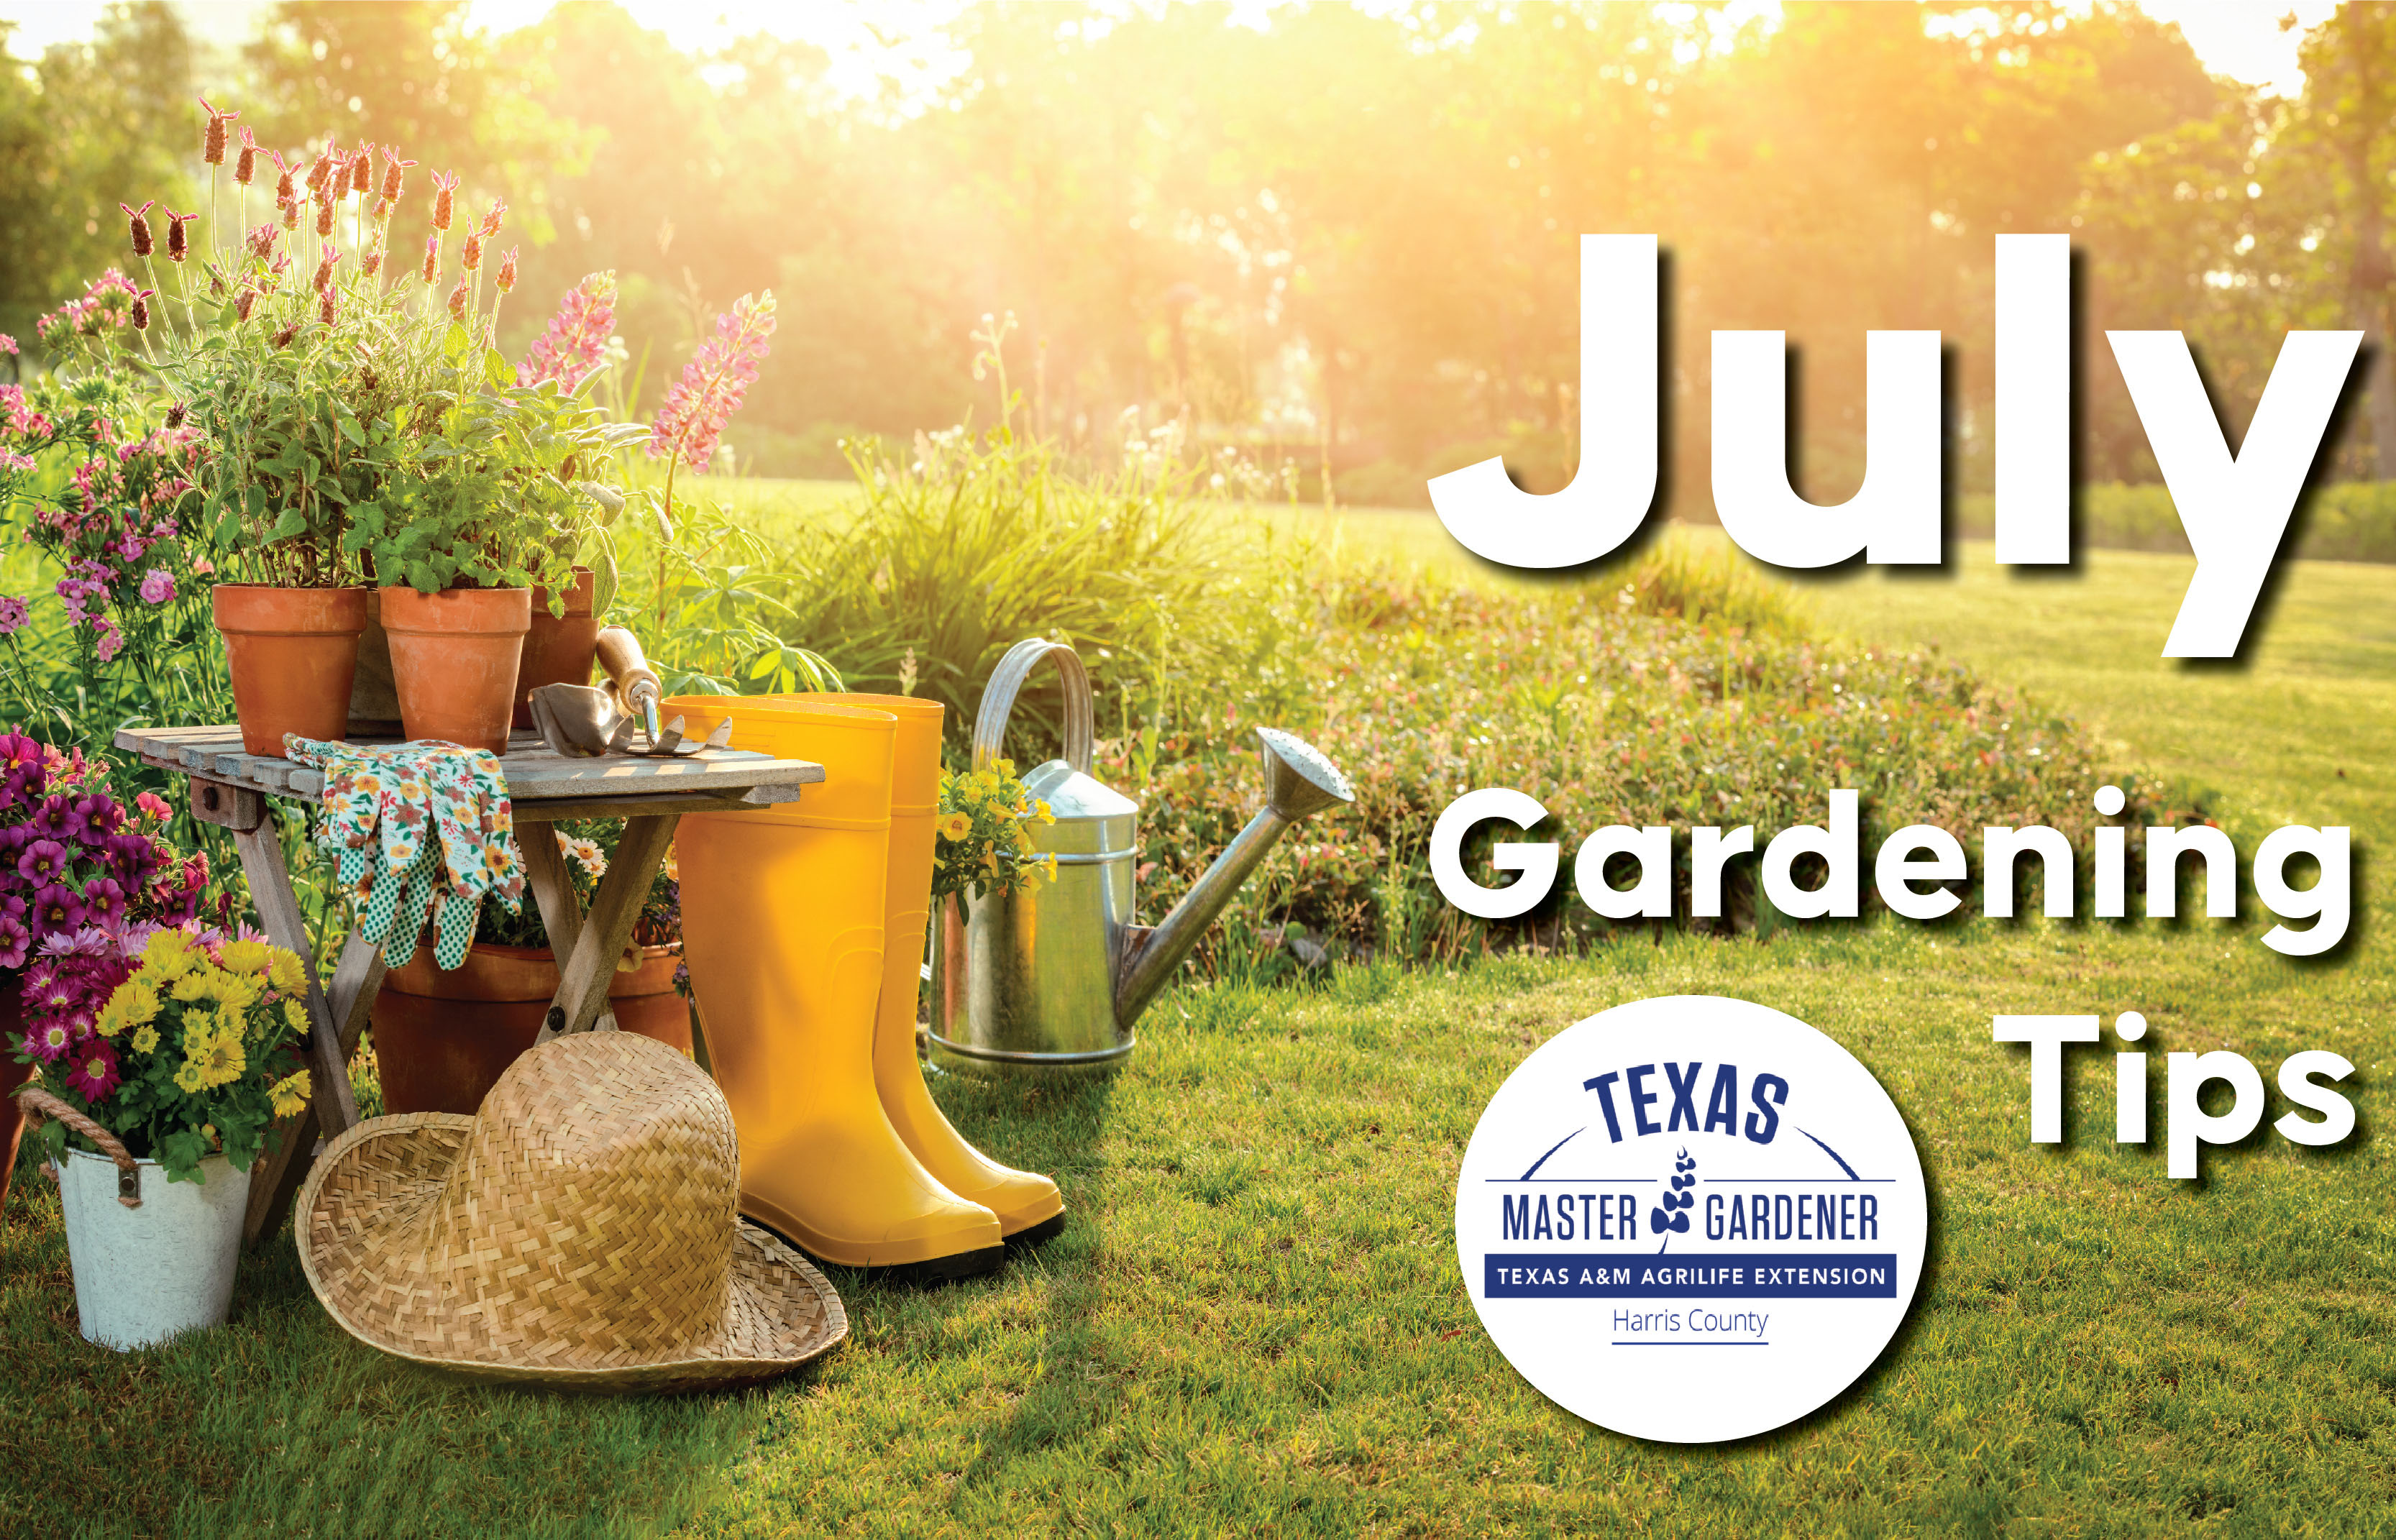 Harris County Master Gardener Shares July Gardening Tips